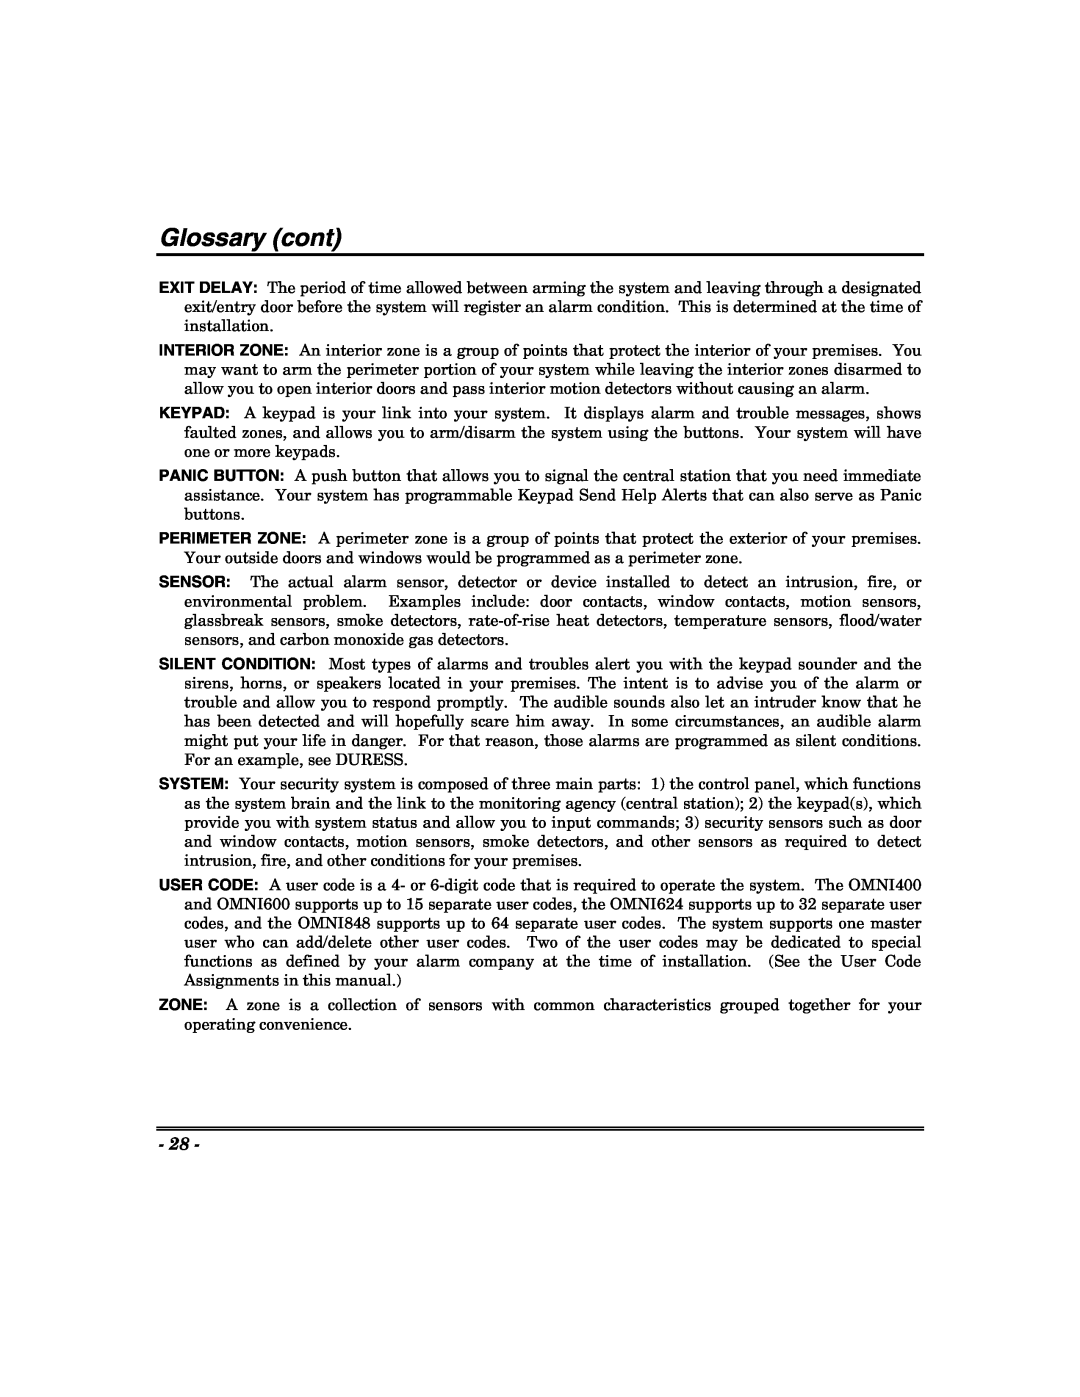 Honeywell 400, 600, 624, 848 manual Glossary cont 